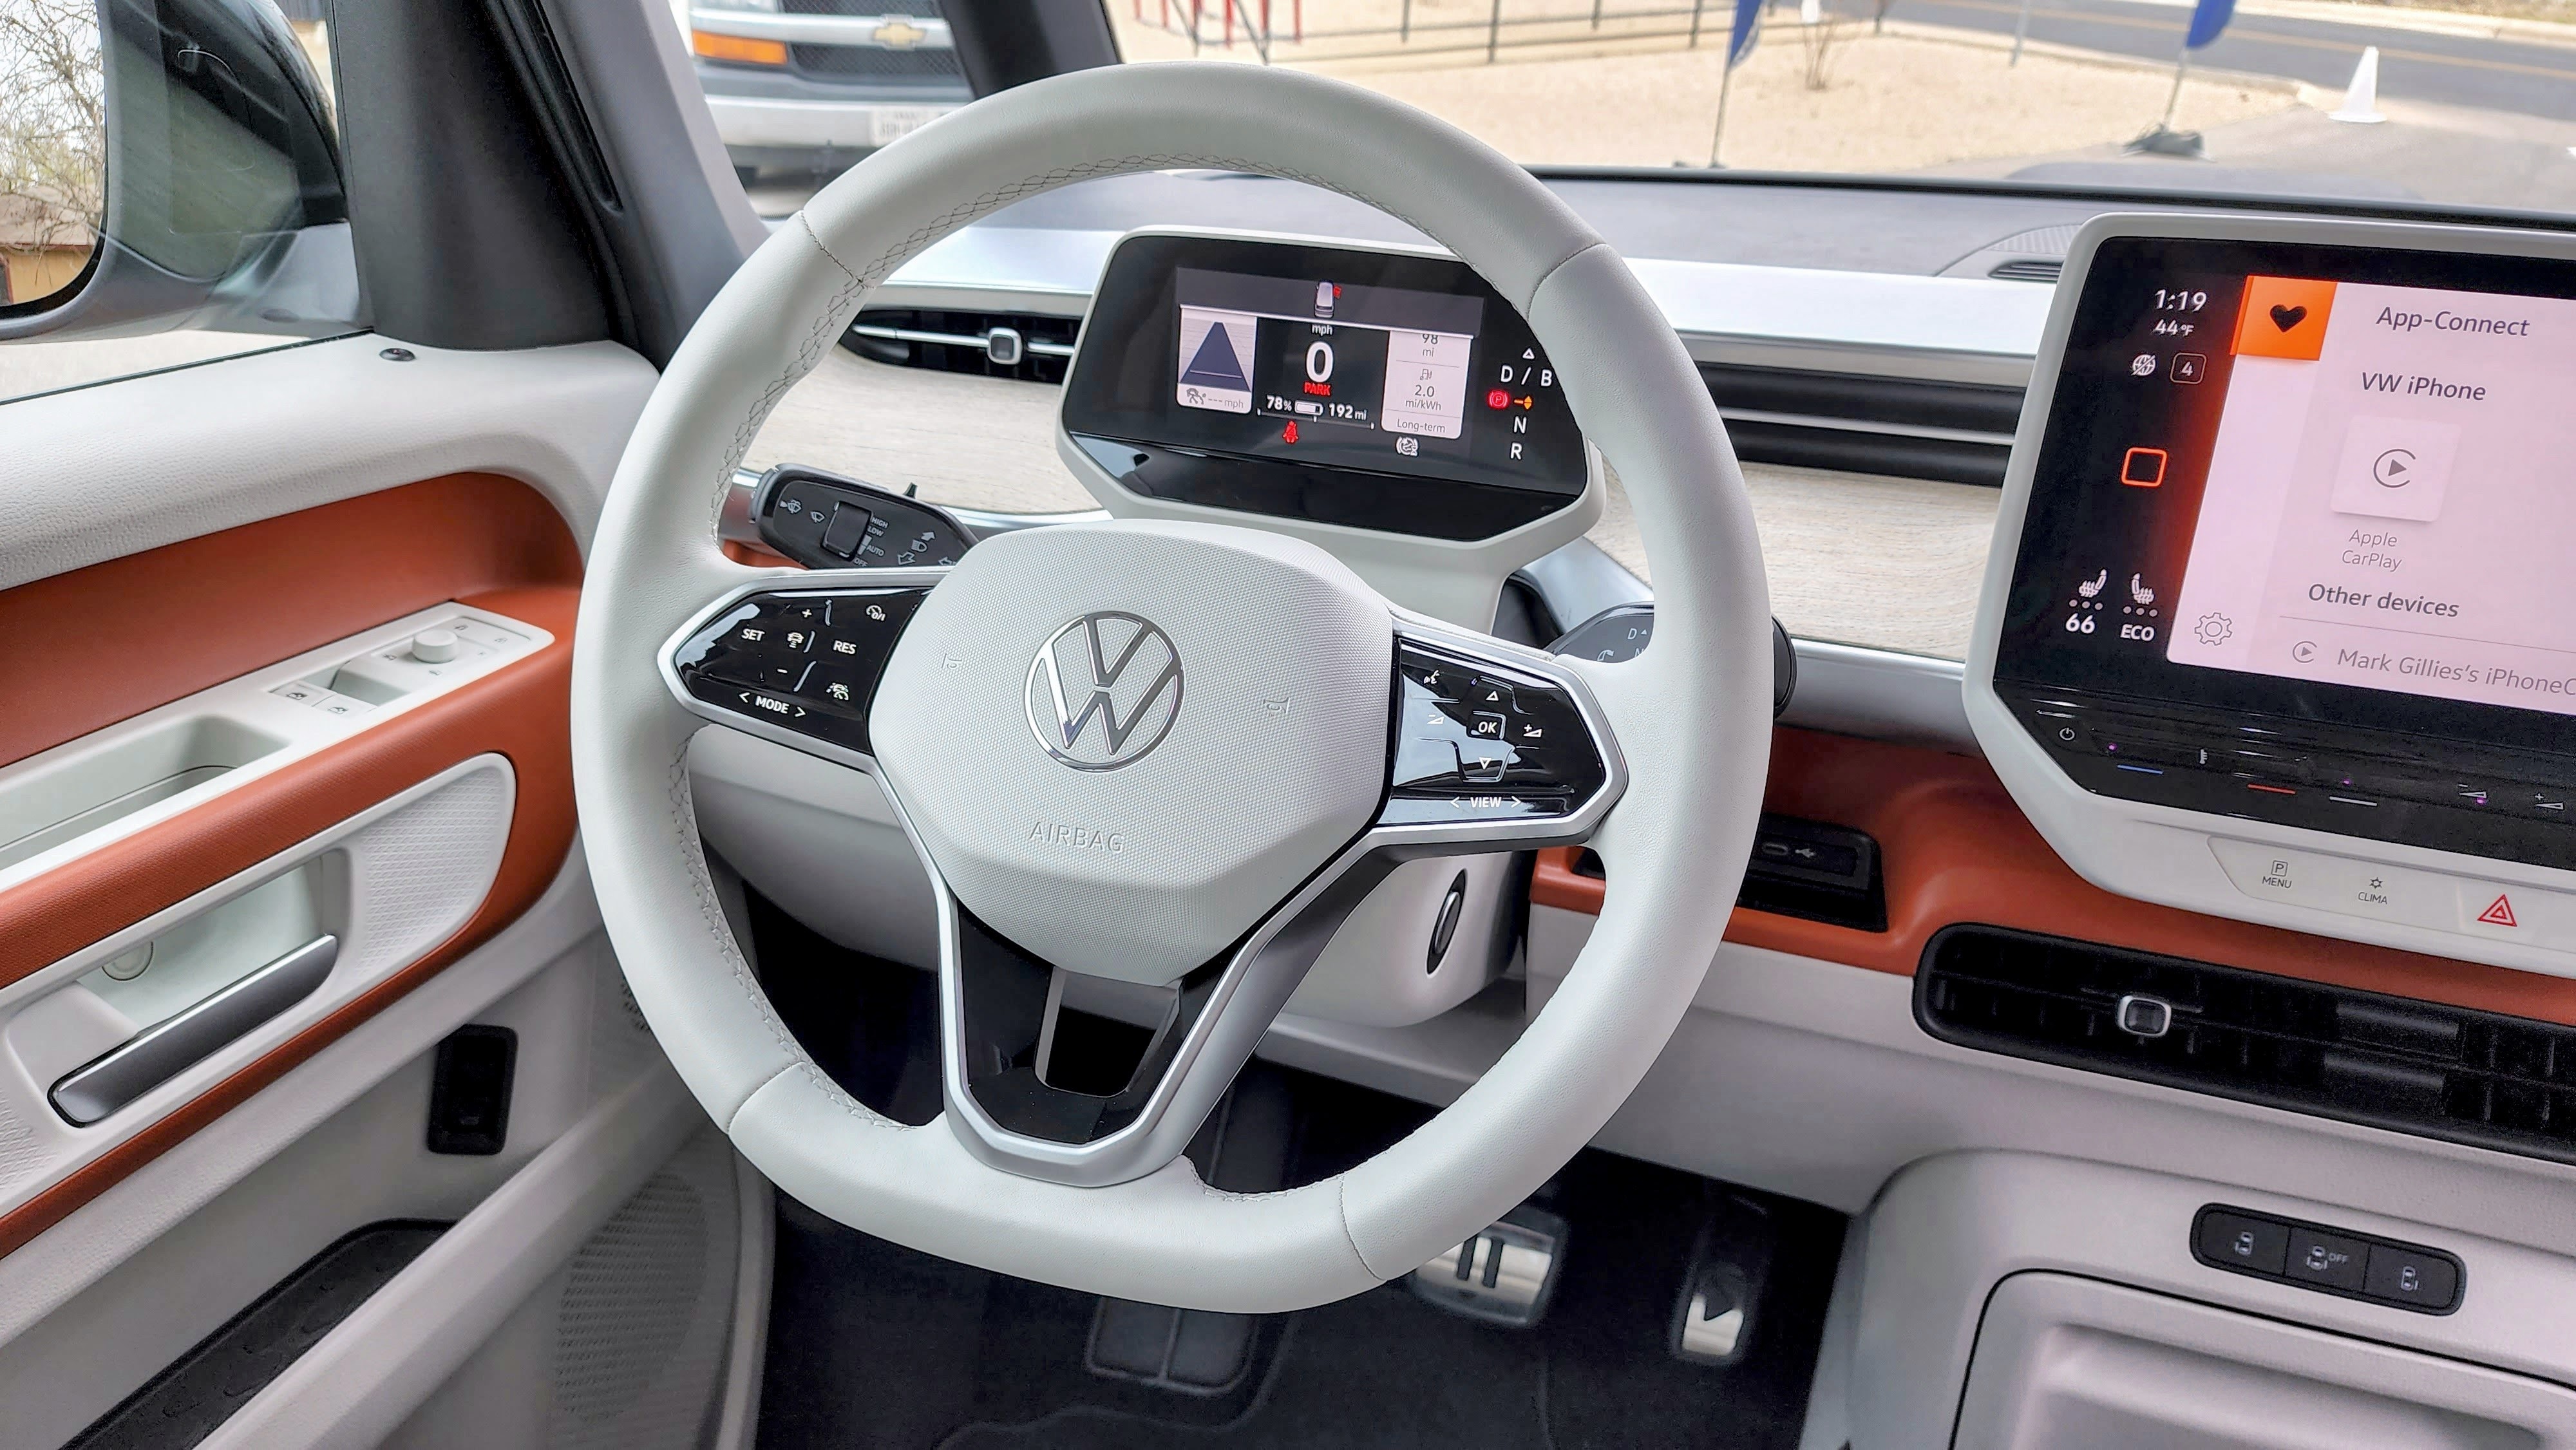 Side-view of the steering wheel